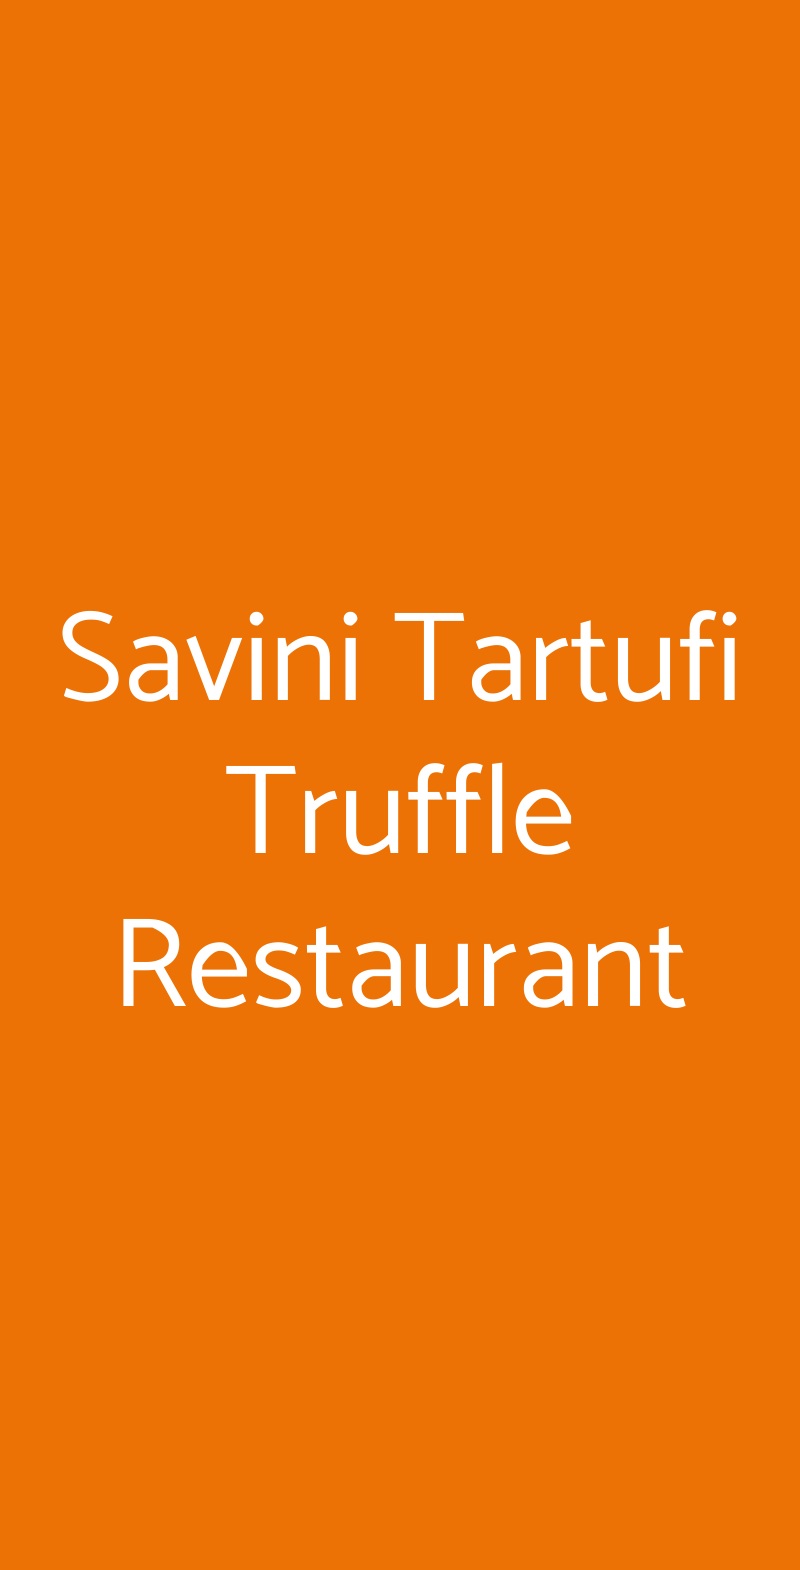 Savini Tartufi Truffle Restaurant Milano menù 1 pagina